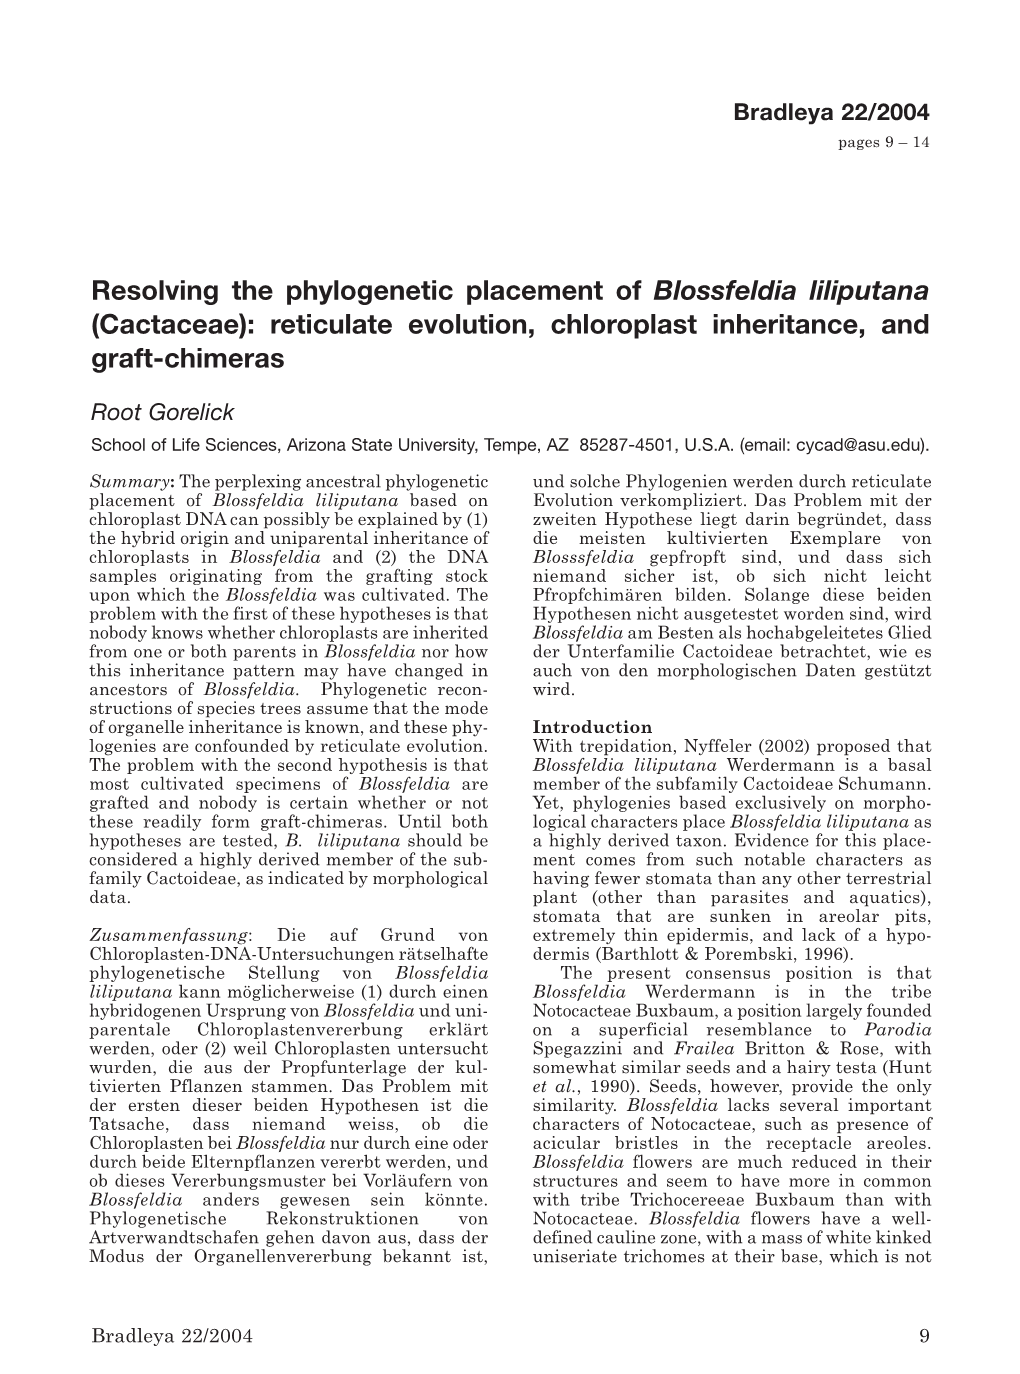 Resolving the Phylogenetic Placement of Blossfeldia Liliputana (Cactaceae): Reticulate Evolution, Chloroplast Inheritance, and Graft-Chimeras